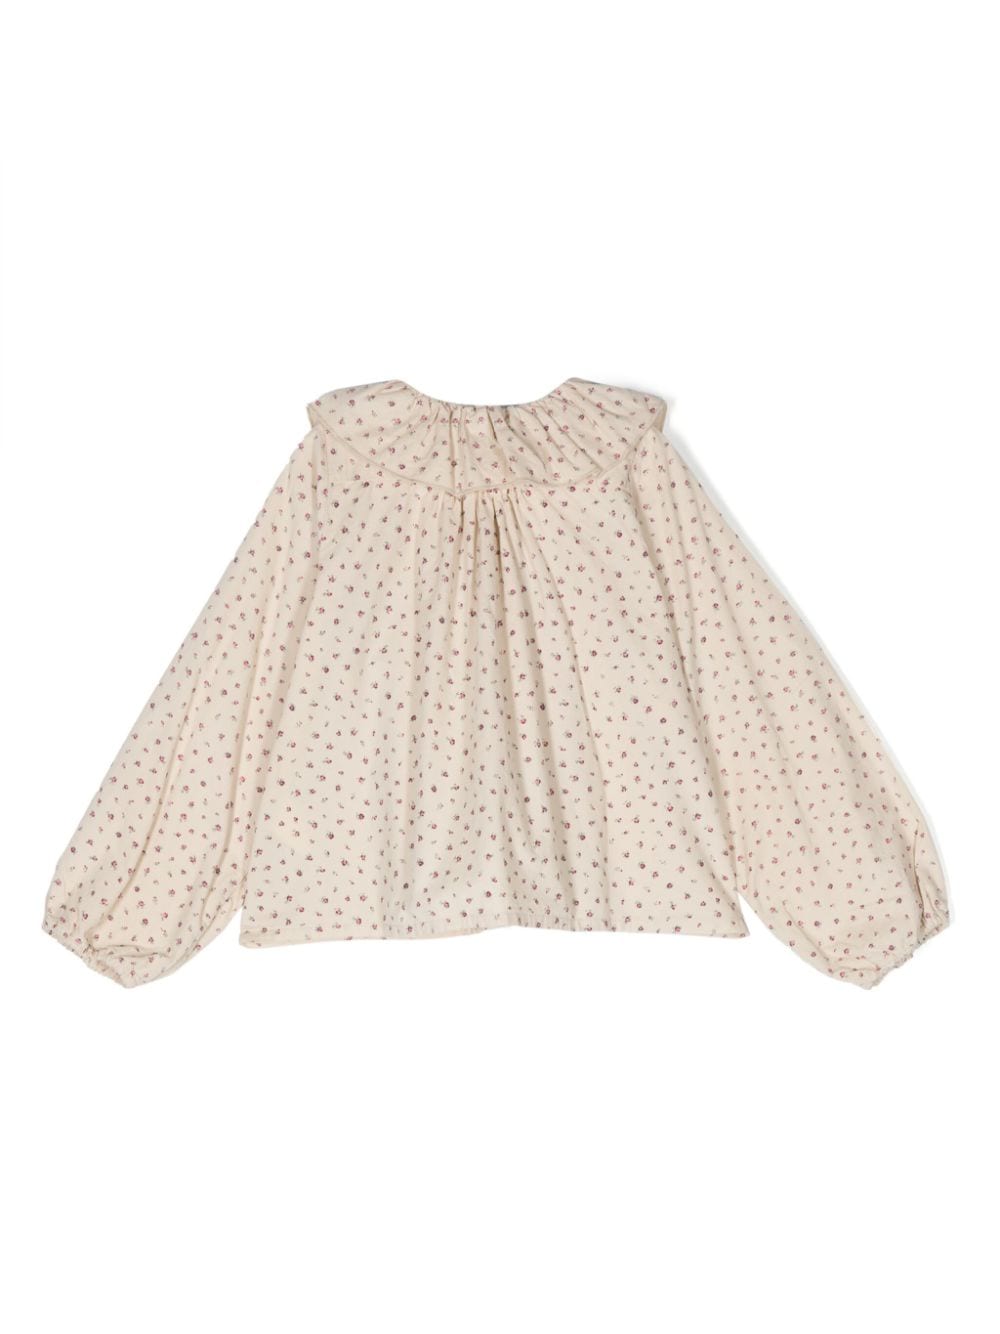 TOCOTO VINTAGE KIDS floral-patterned cotton blouse - Beige